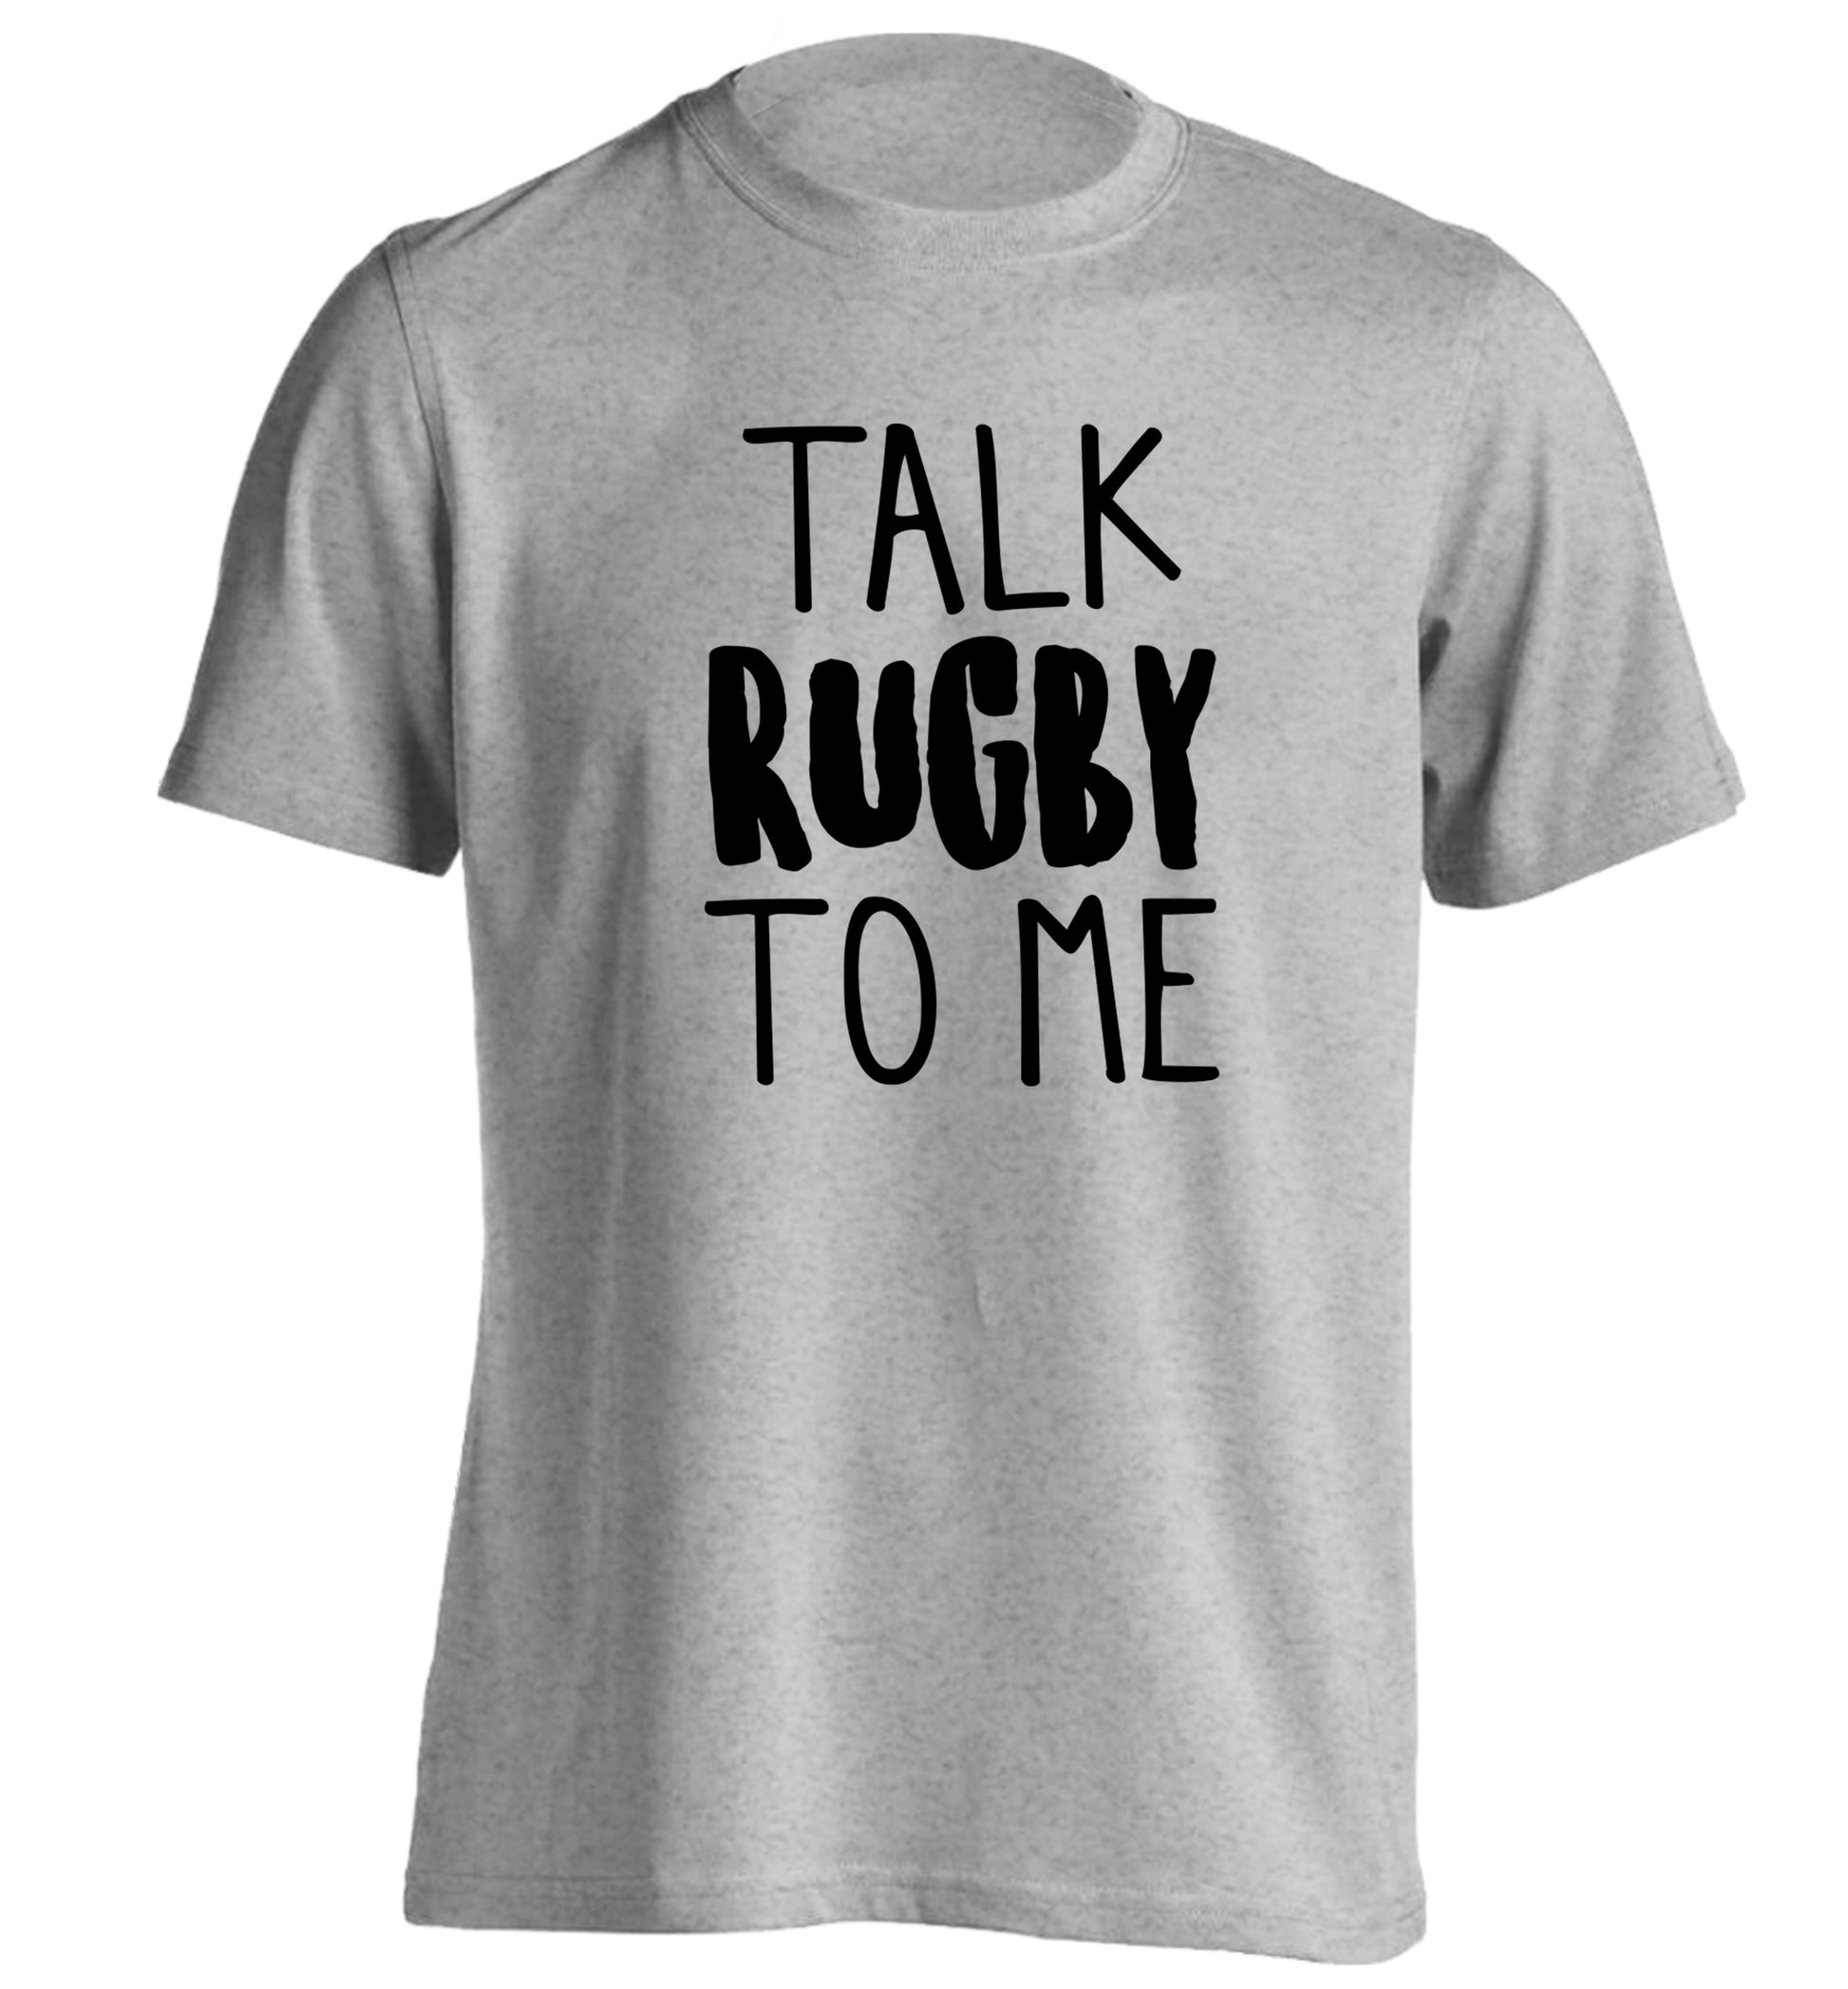 Talk rugby to me adults unisex grey Tshirt 2XL